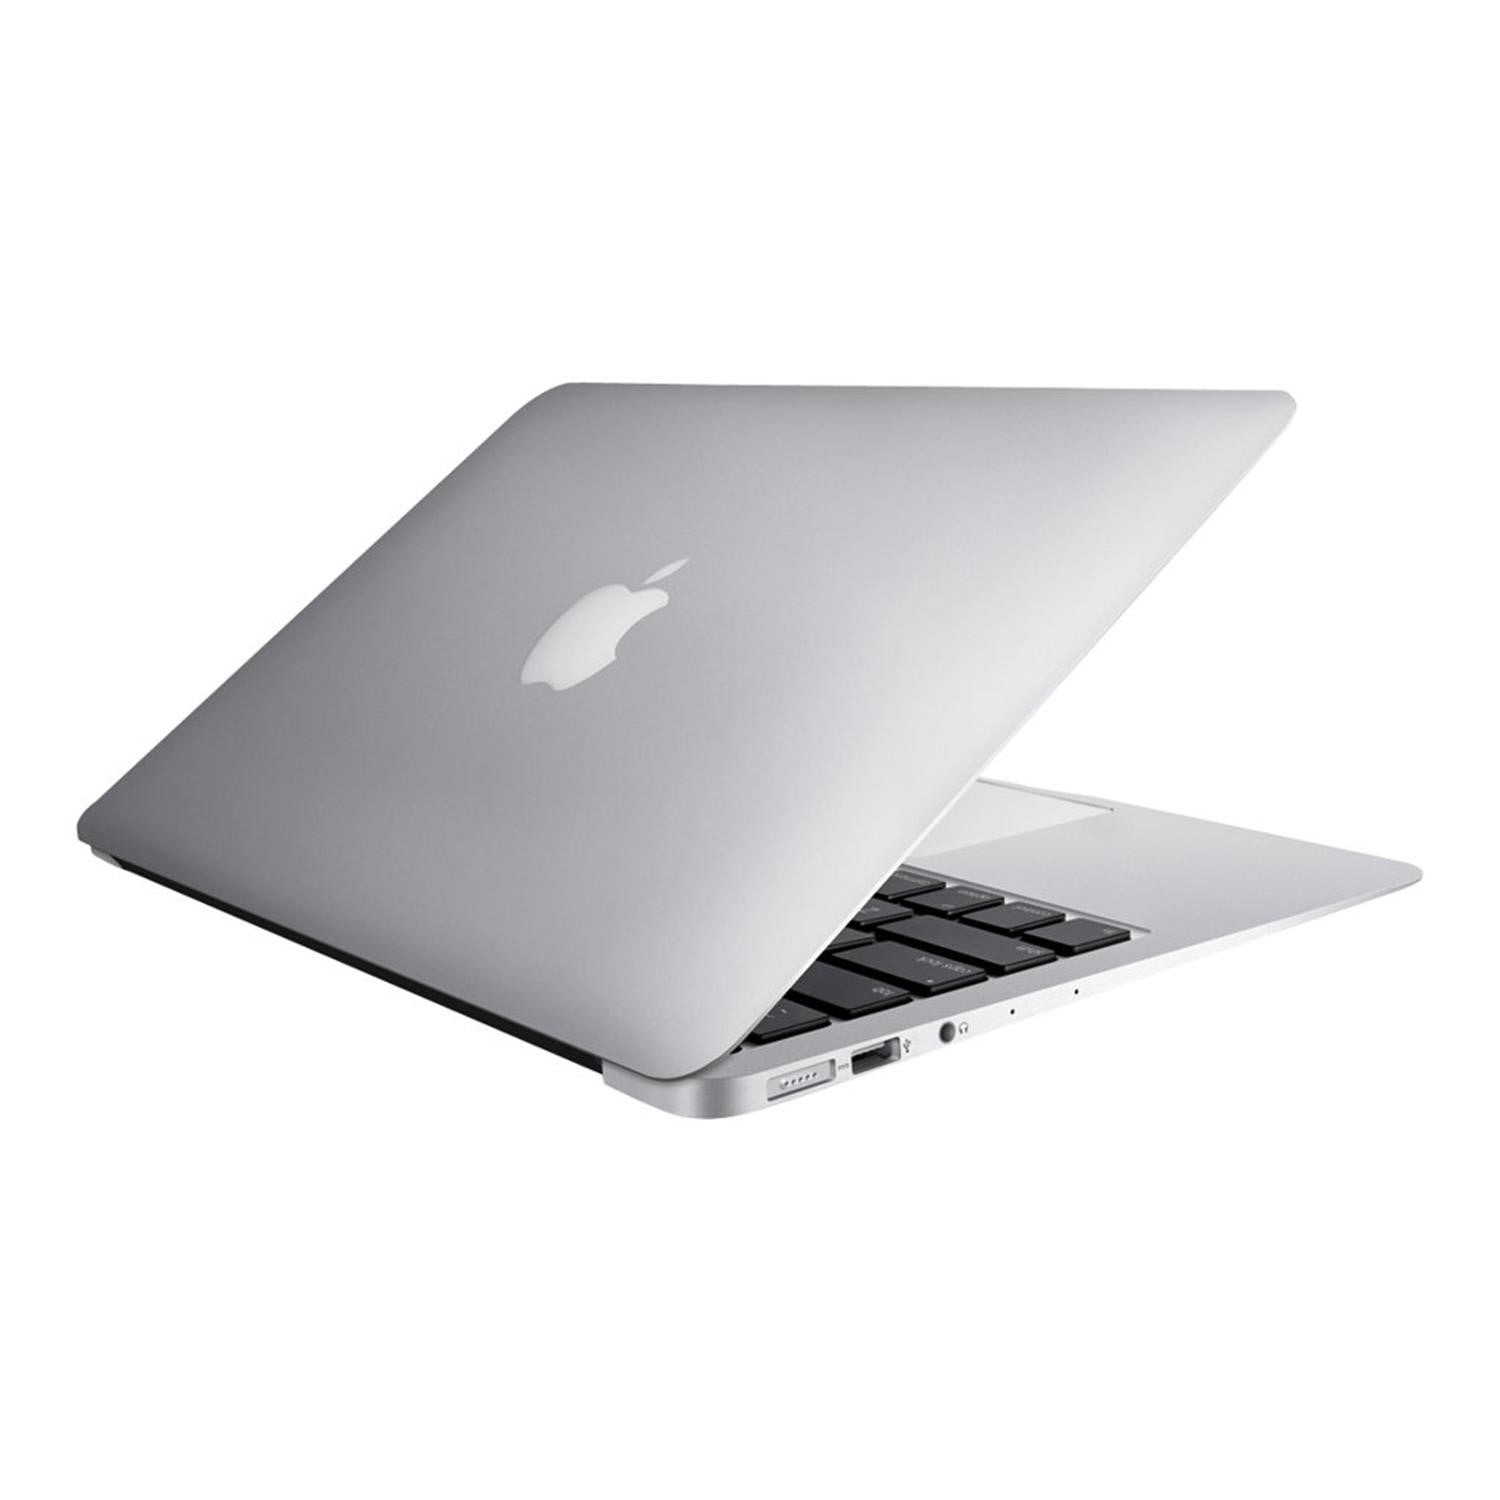 Apple MacBook Air 13.3'' MJVG2LL/A (2015) Intel Core i5 4GB RAM 256GB SSD Silver - Good